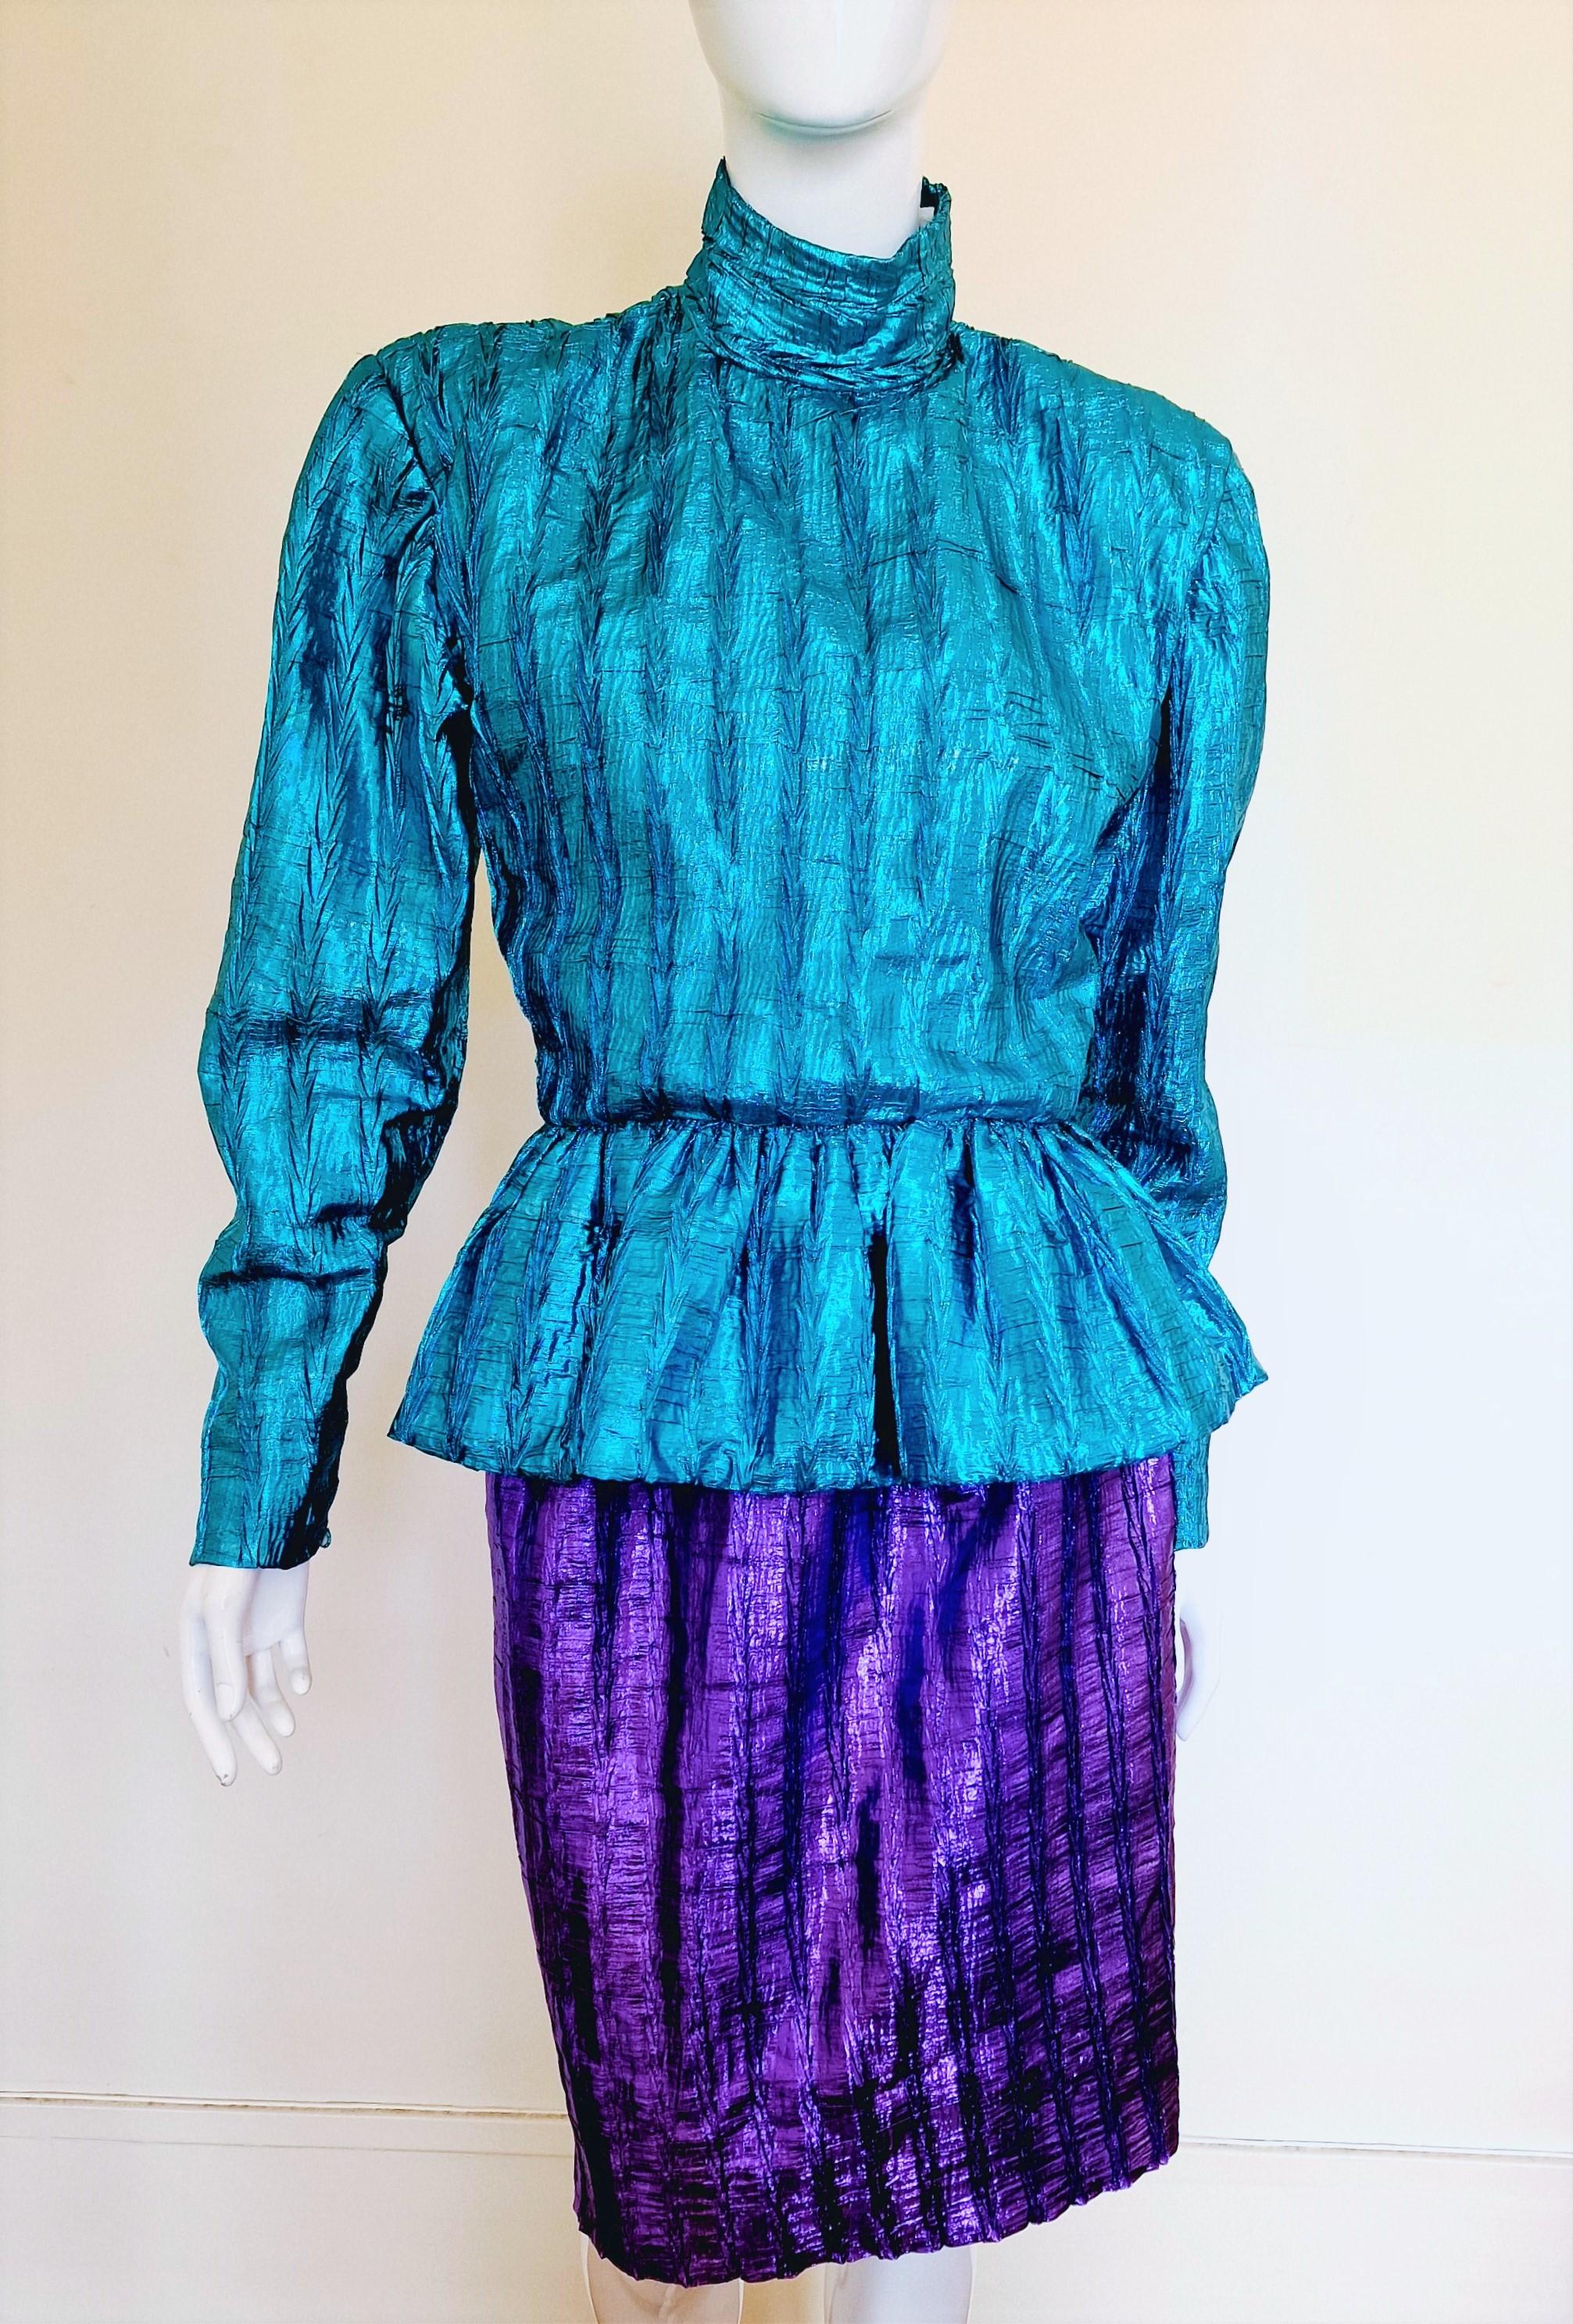 Christian Dior Metall Boutique Elena Vintage 60er 70er 80er Jahre Anzug Ensemble Kleid (Blau) im Angebot